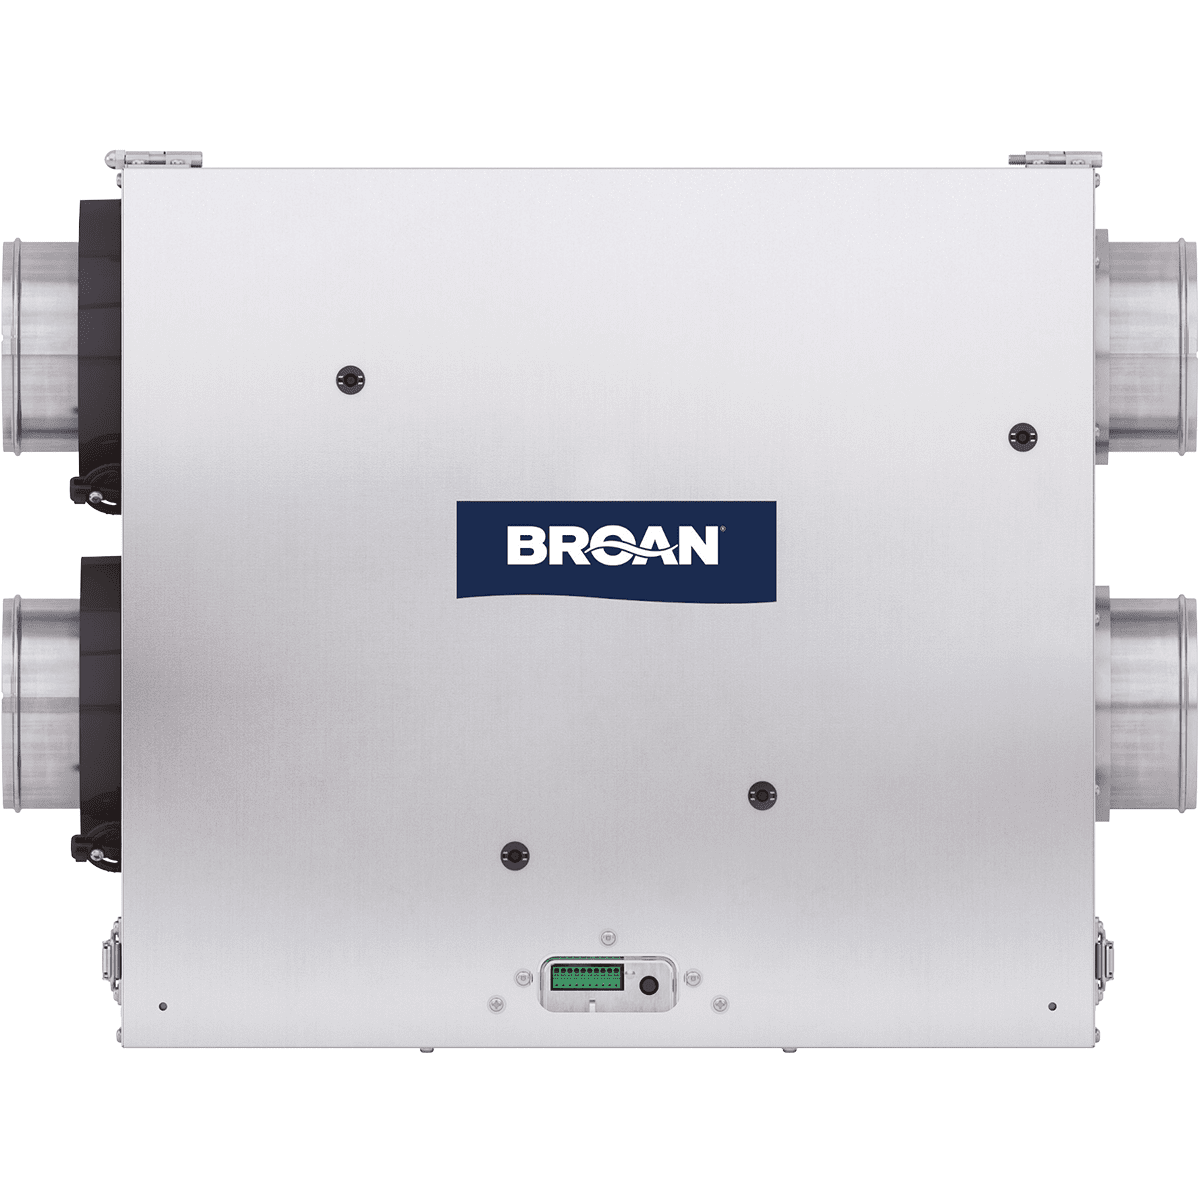 Broan ERV100S Sky Series 102 CFM Ceiling Mounted Energy Recovery Ventilator